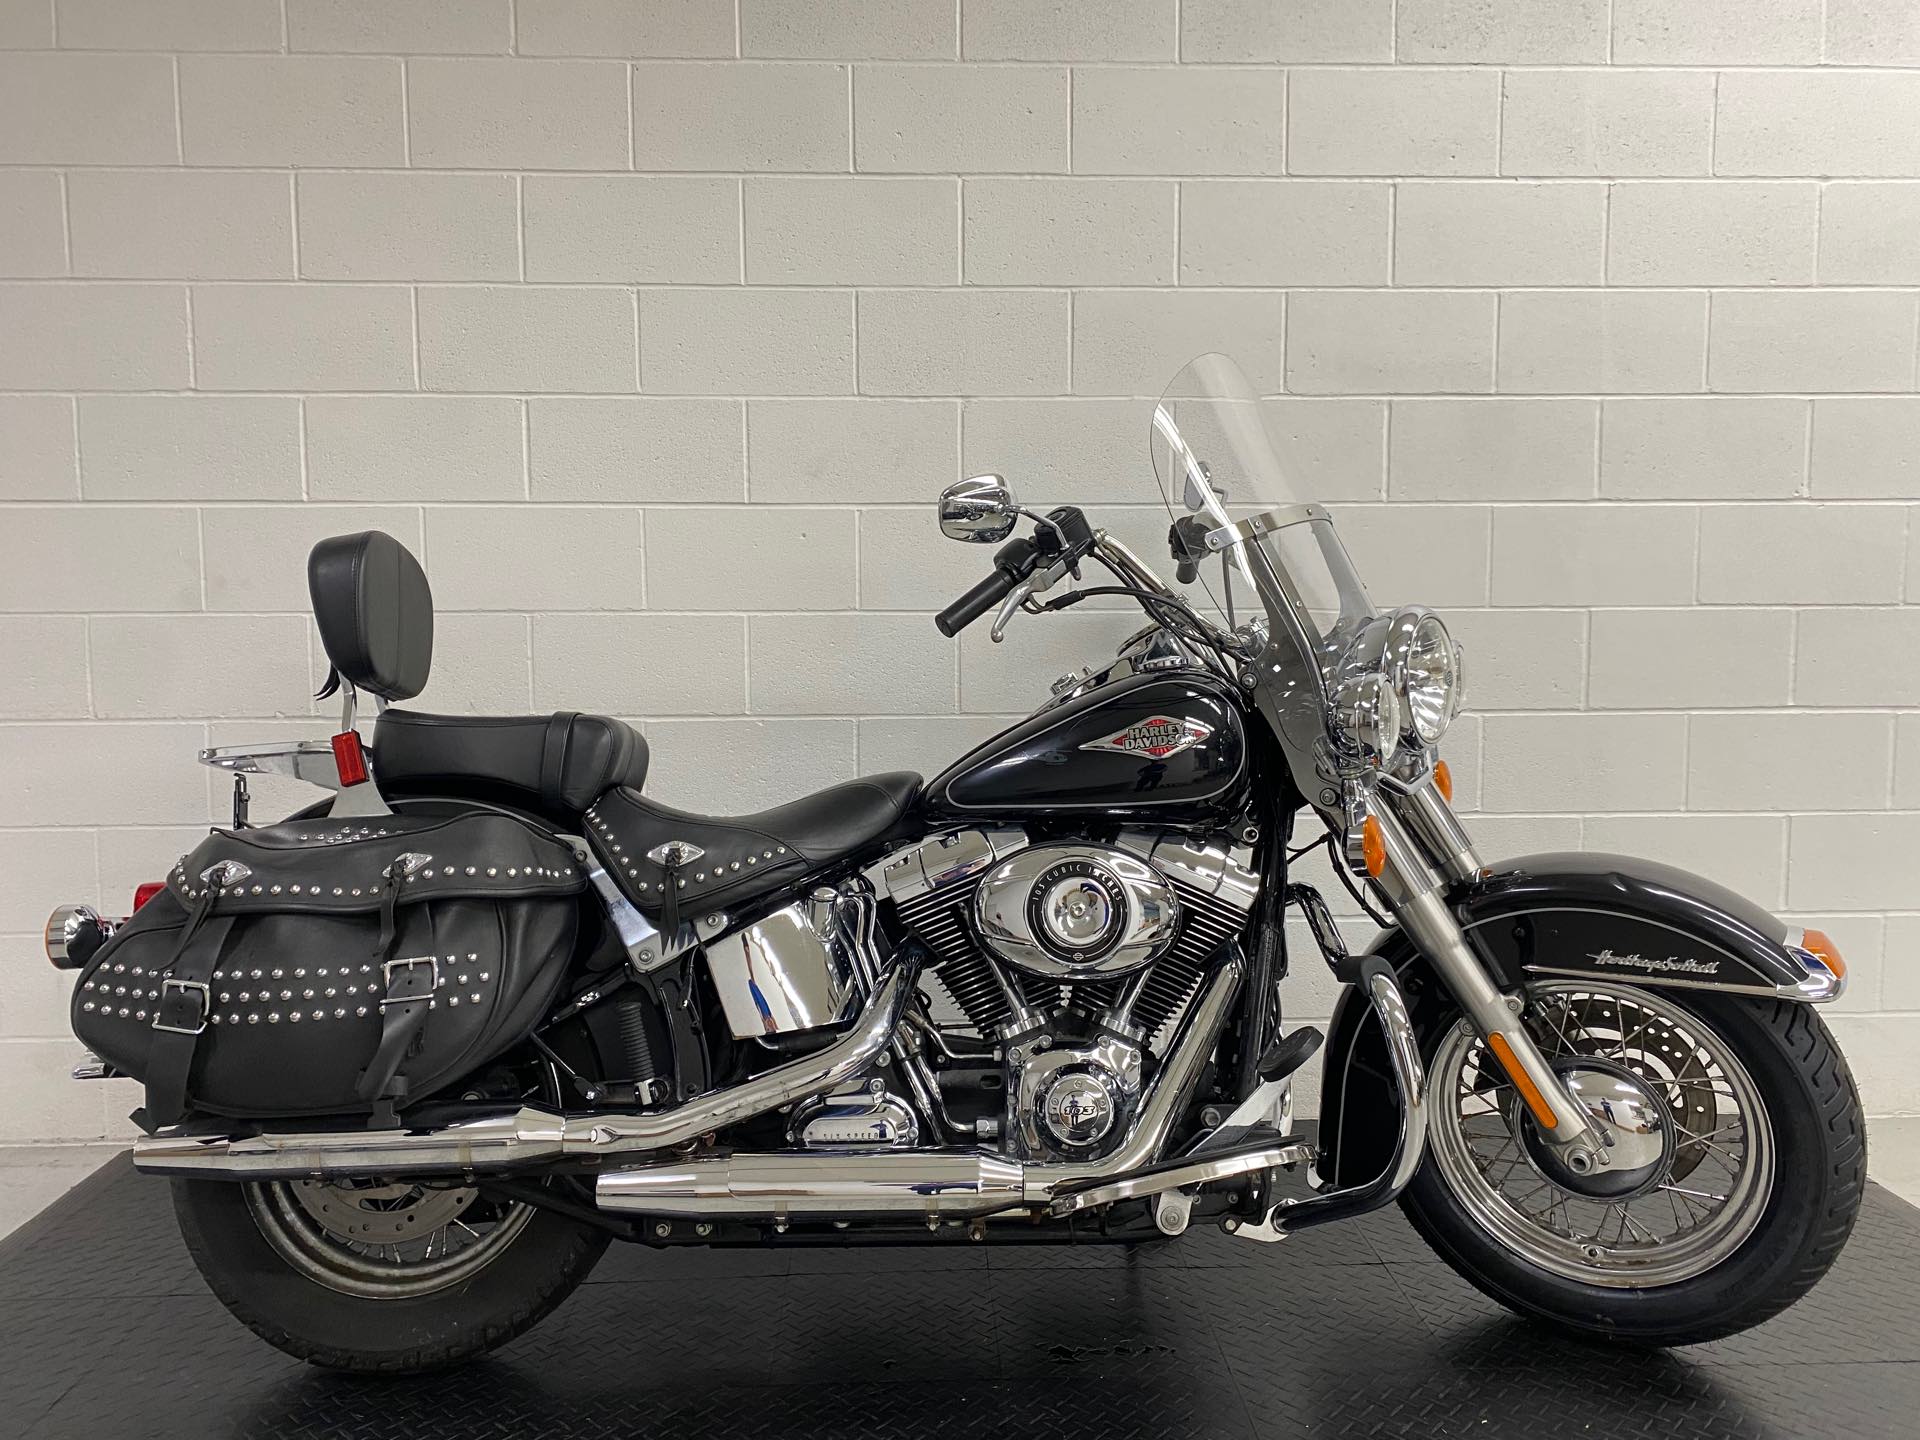 2014 Harley-Davidson Softail Heritage Softail Classic at Destination Harley-Davidson®, Silverdale, WA 98383